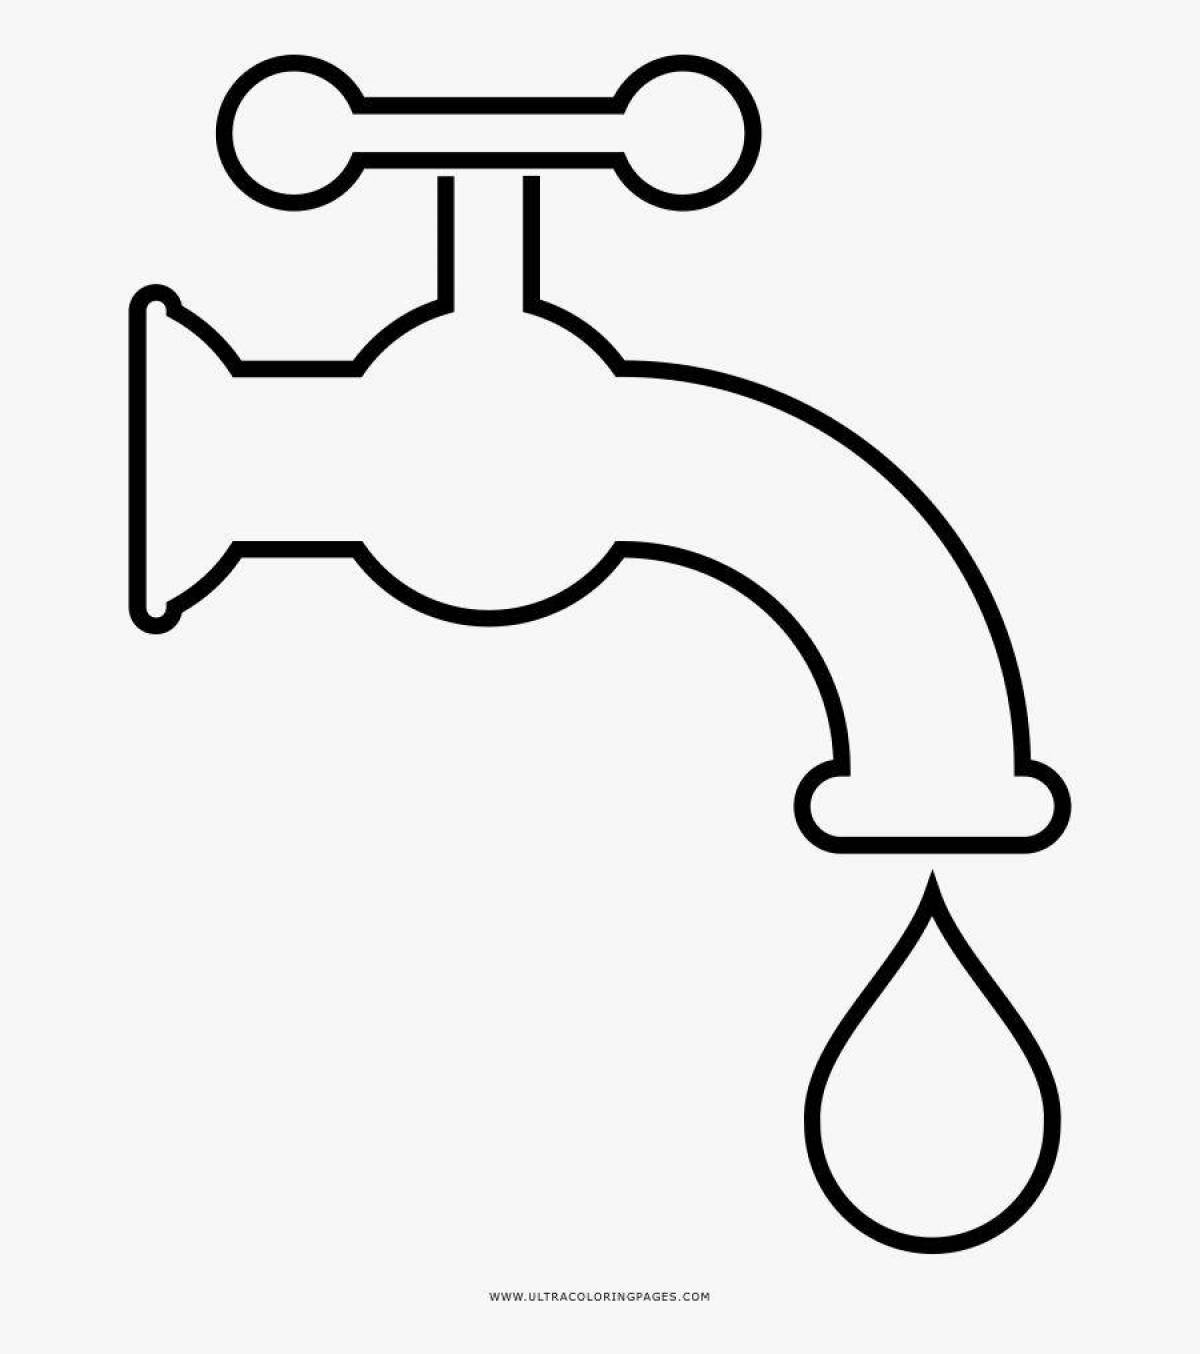 Water faucet #17